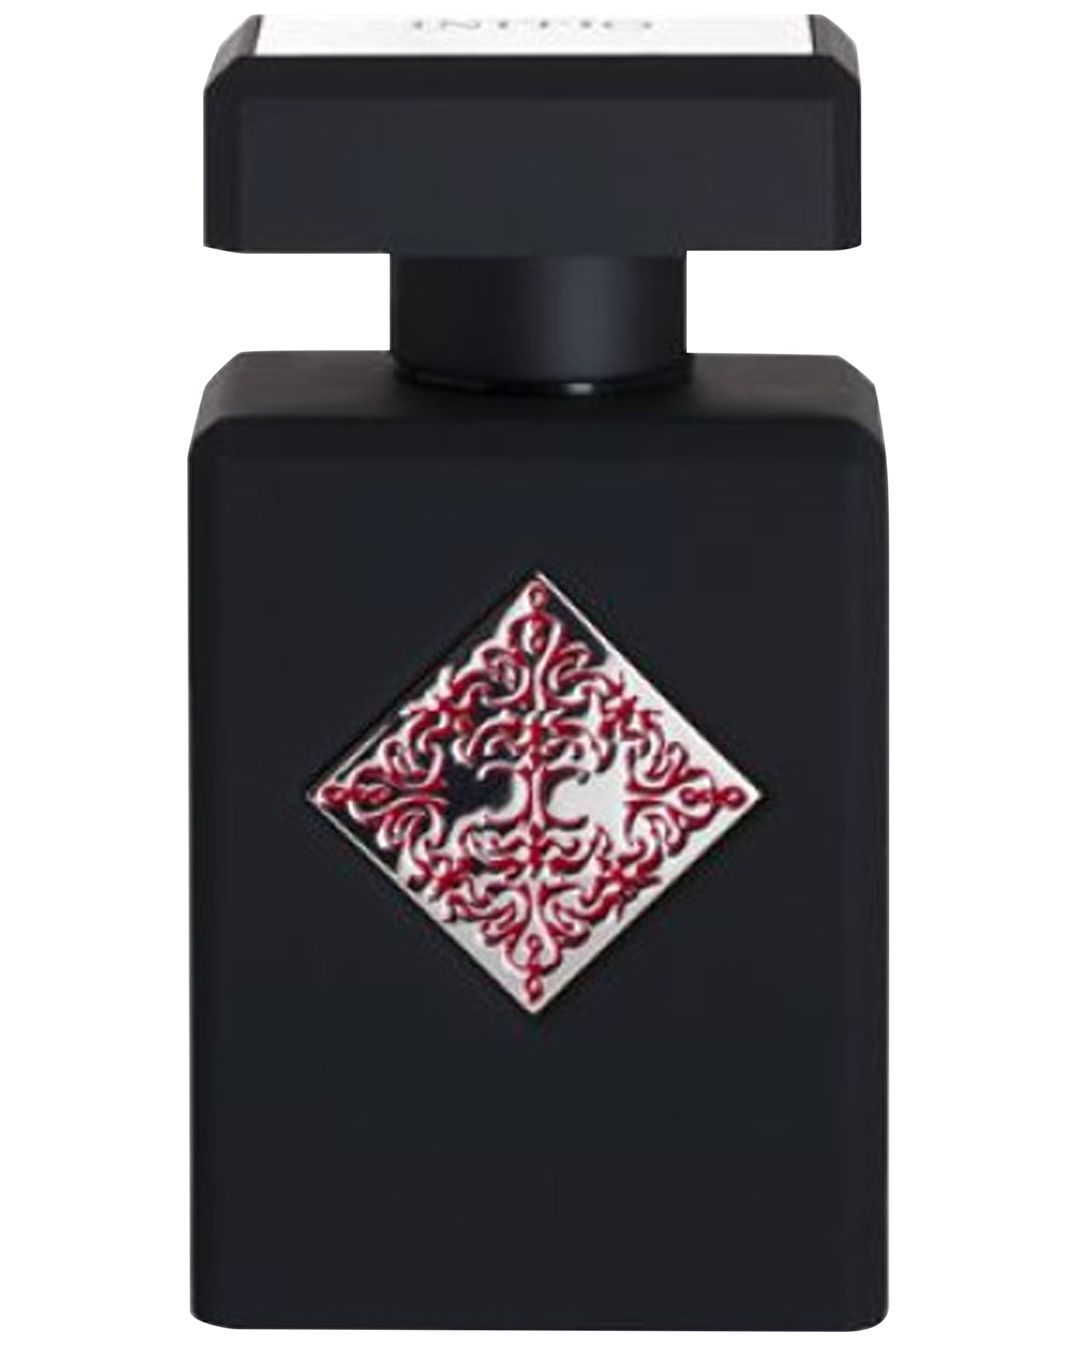 Initio addictive vibration. Initio Parfums prives Magnetic Blend 1. Side Effect Initio Parfums prives. Atomic Rose Initio Parfums prives. Парфюм инитио addictive Vibration.